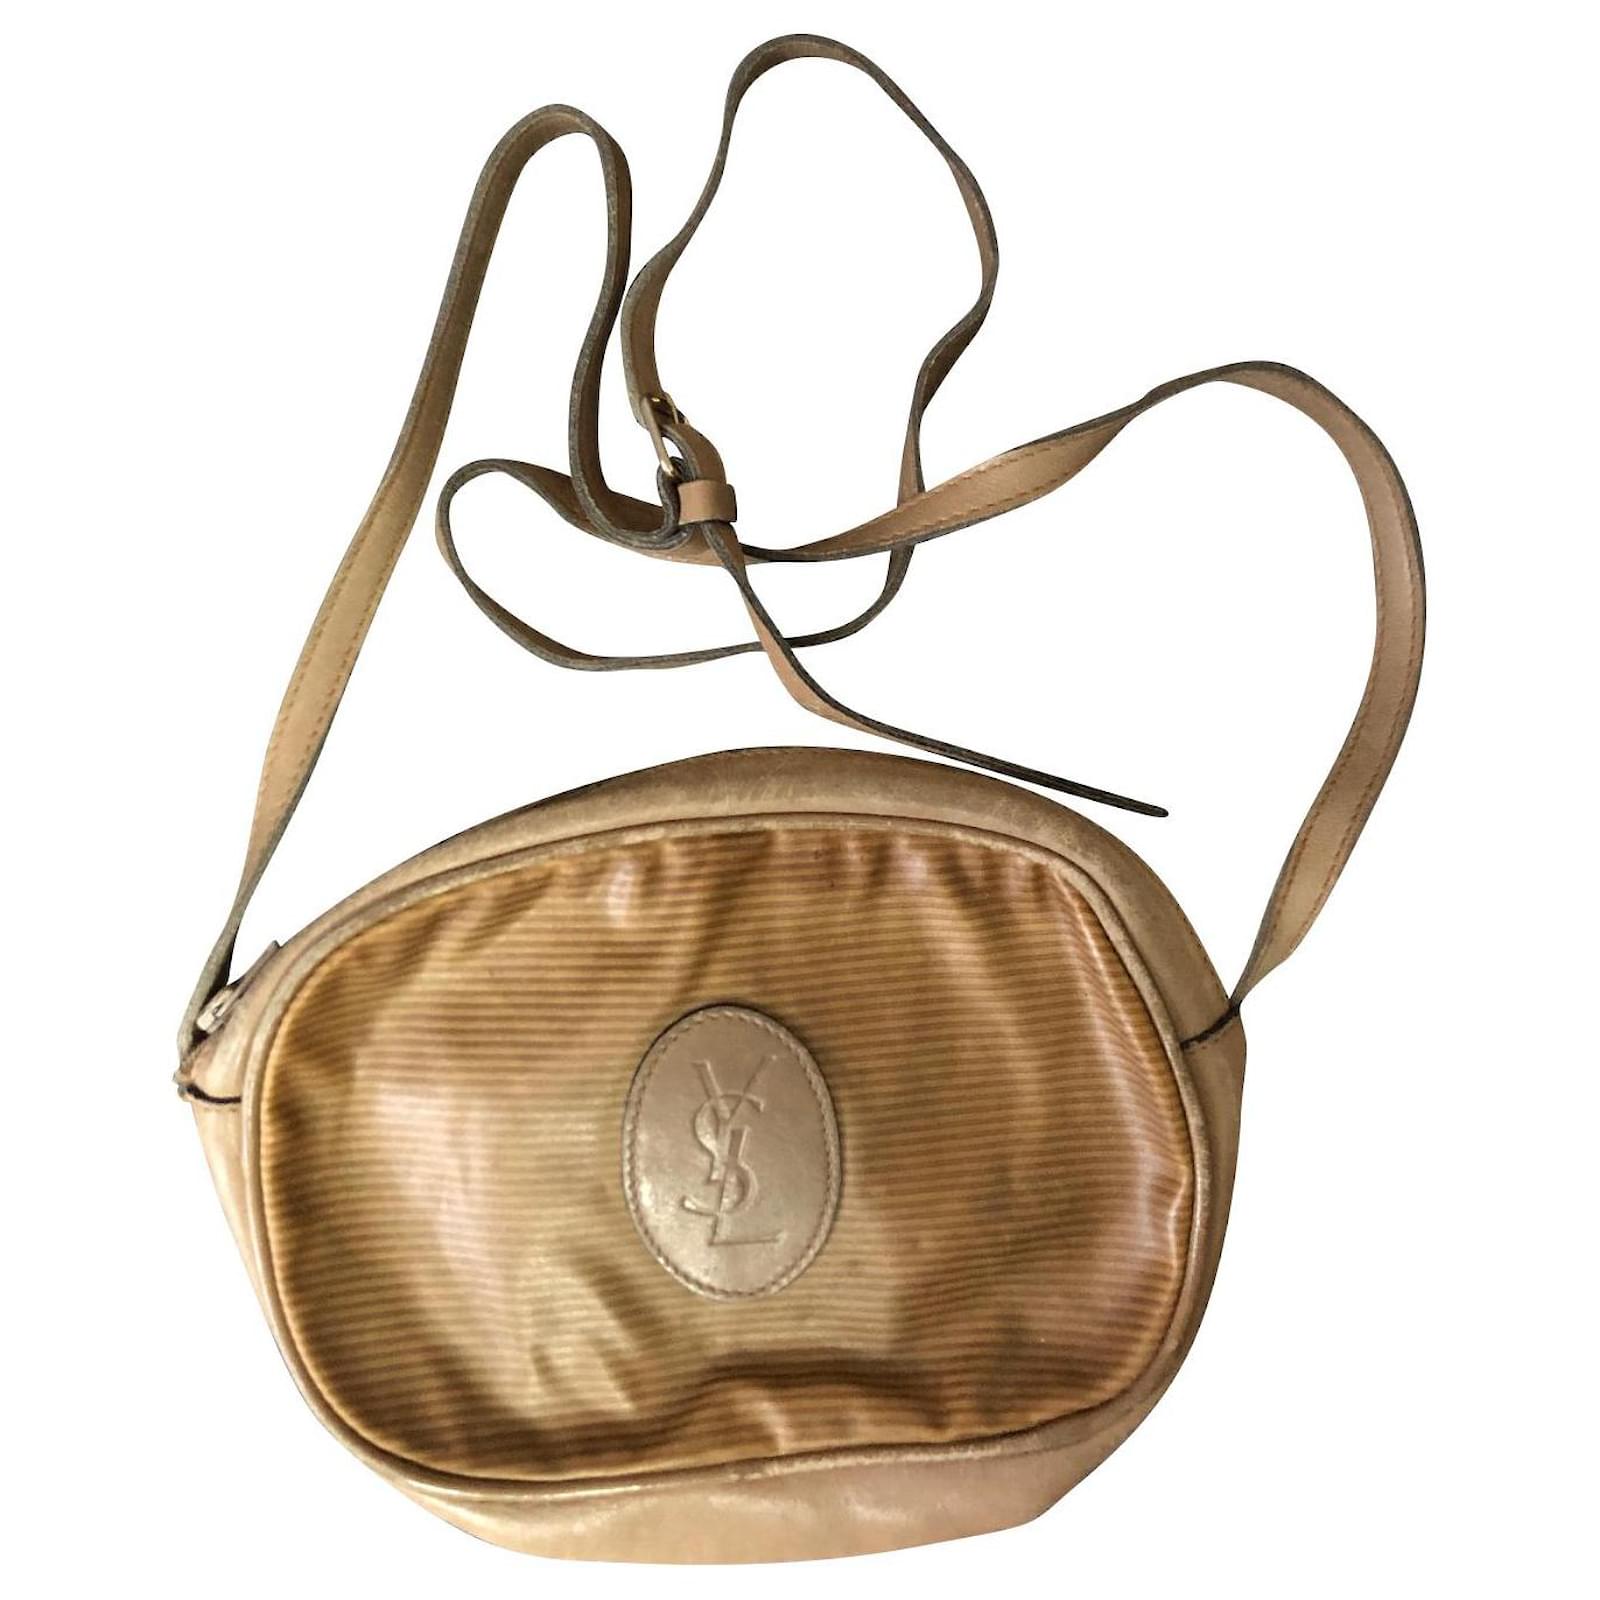 Yves Saint Laurent, Bags, Ysl Box Bag